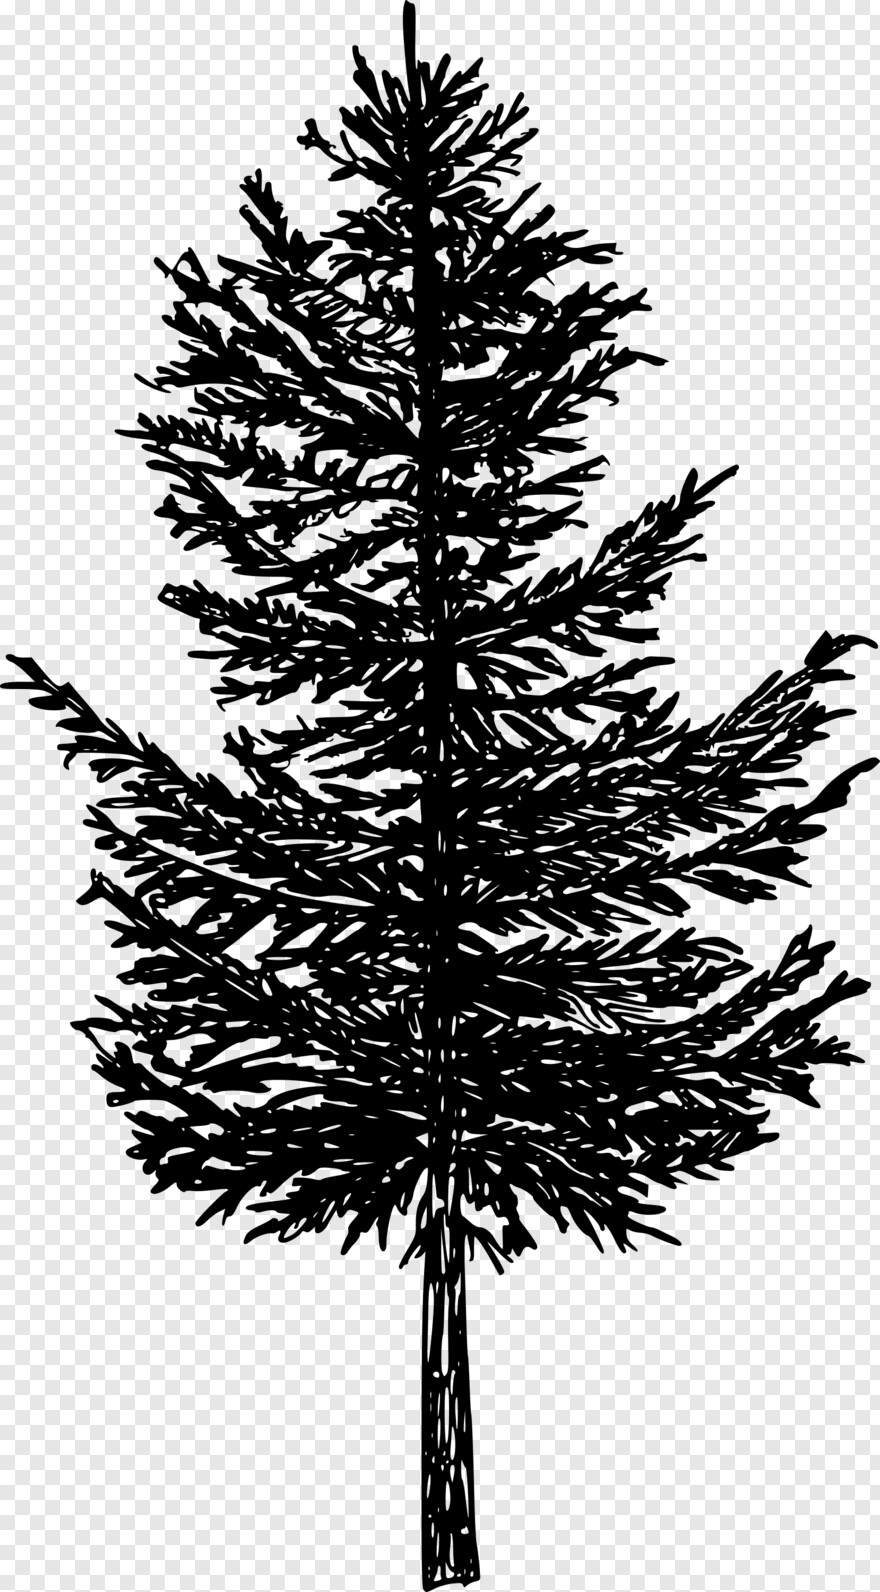 pine-tree # 459660